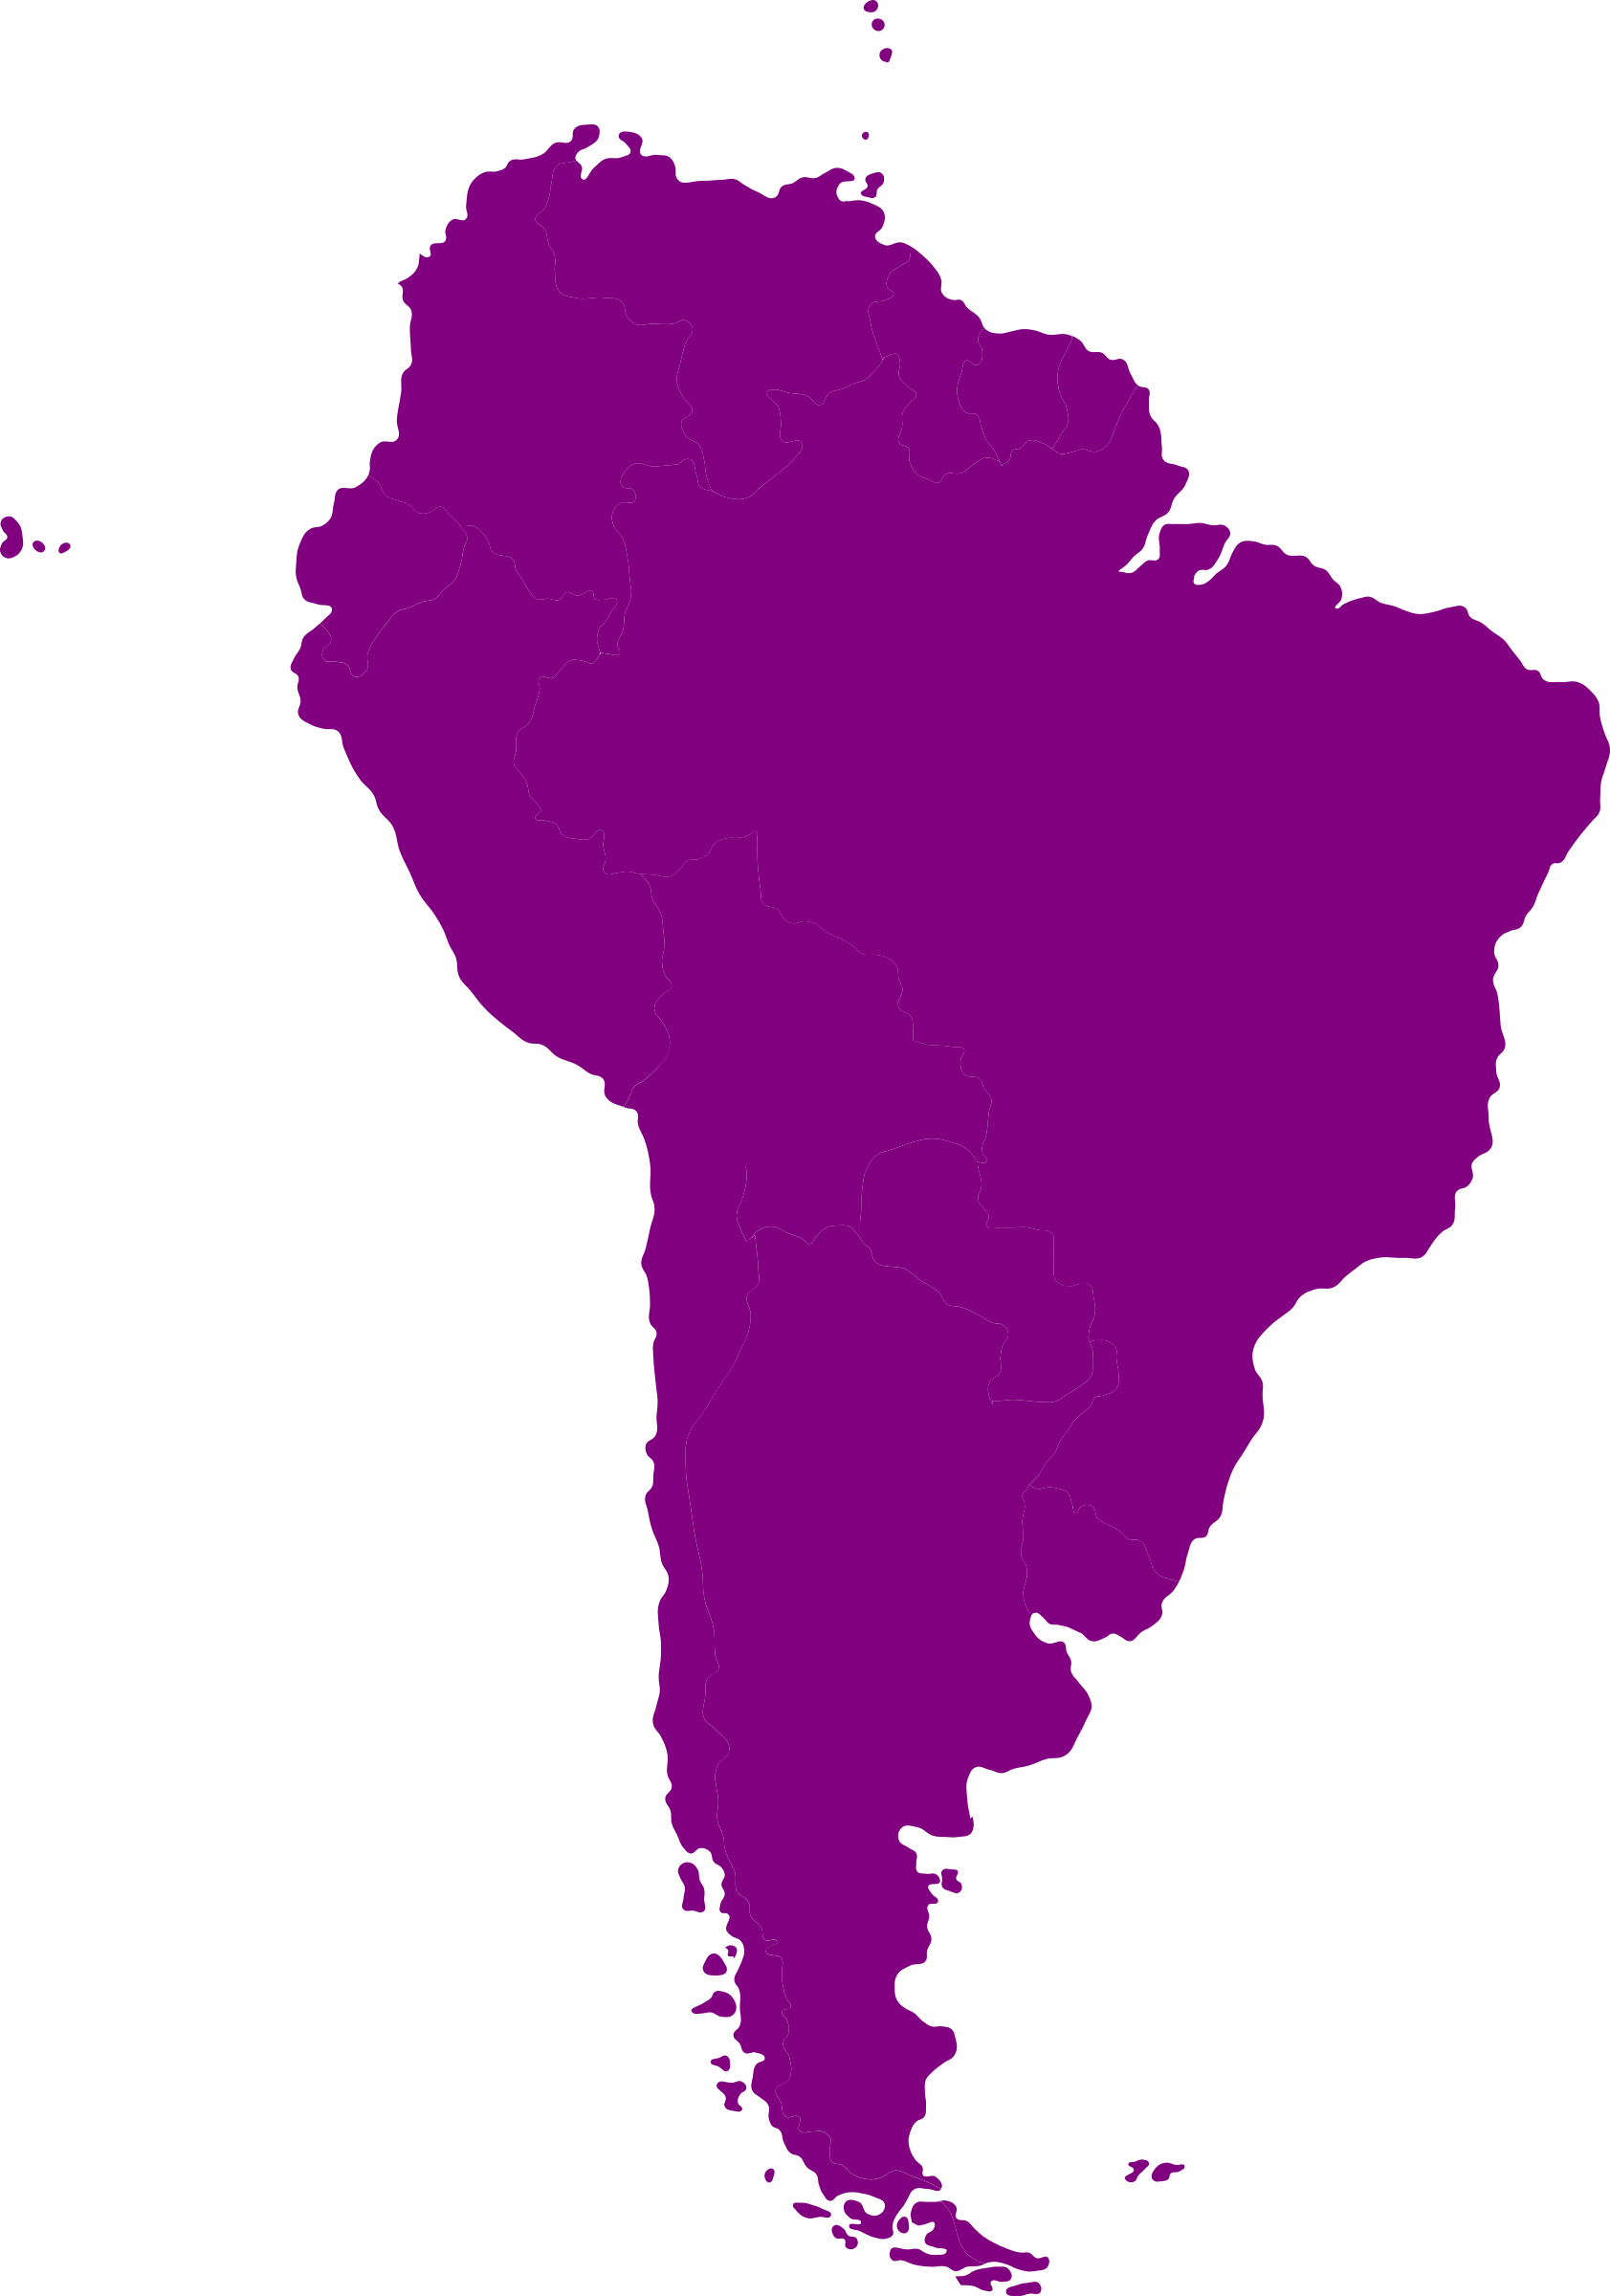 South american country. Контингент Южная Америка. Южная америкаонтинент. Южная Америка материк. Южная Америка геоконтуры.